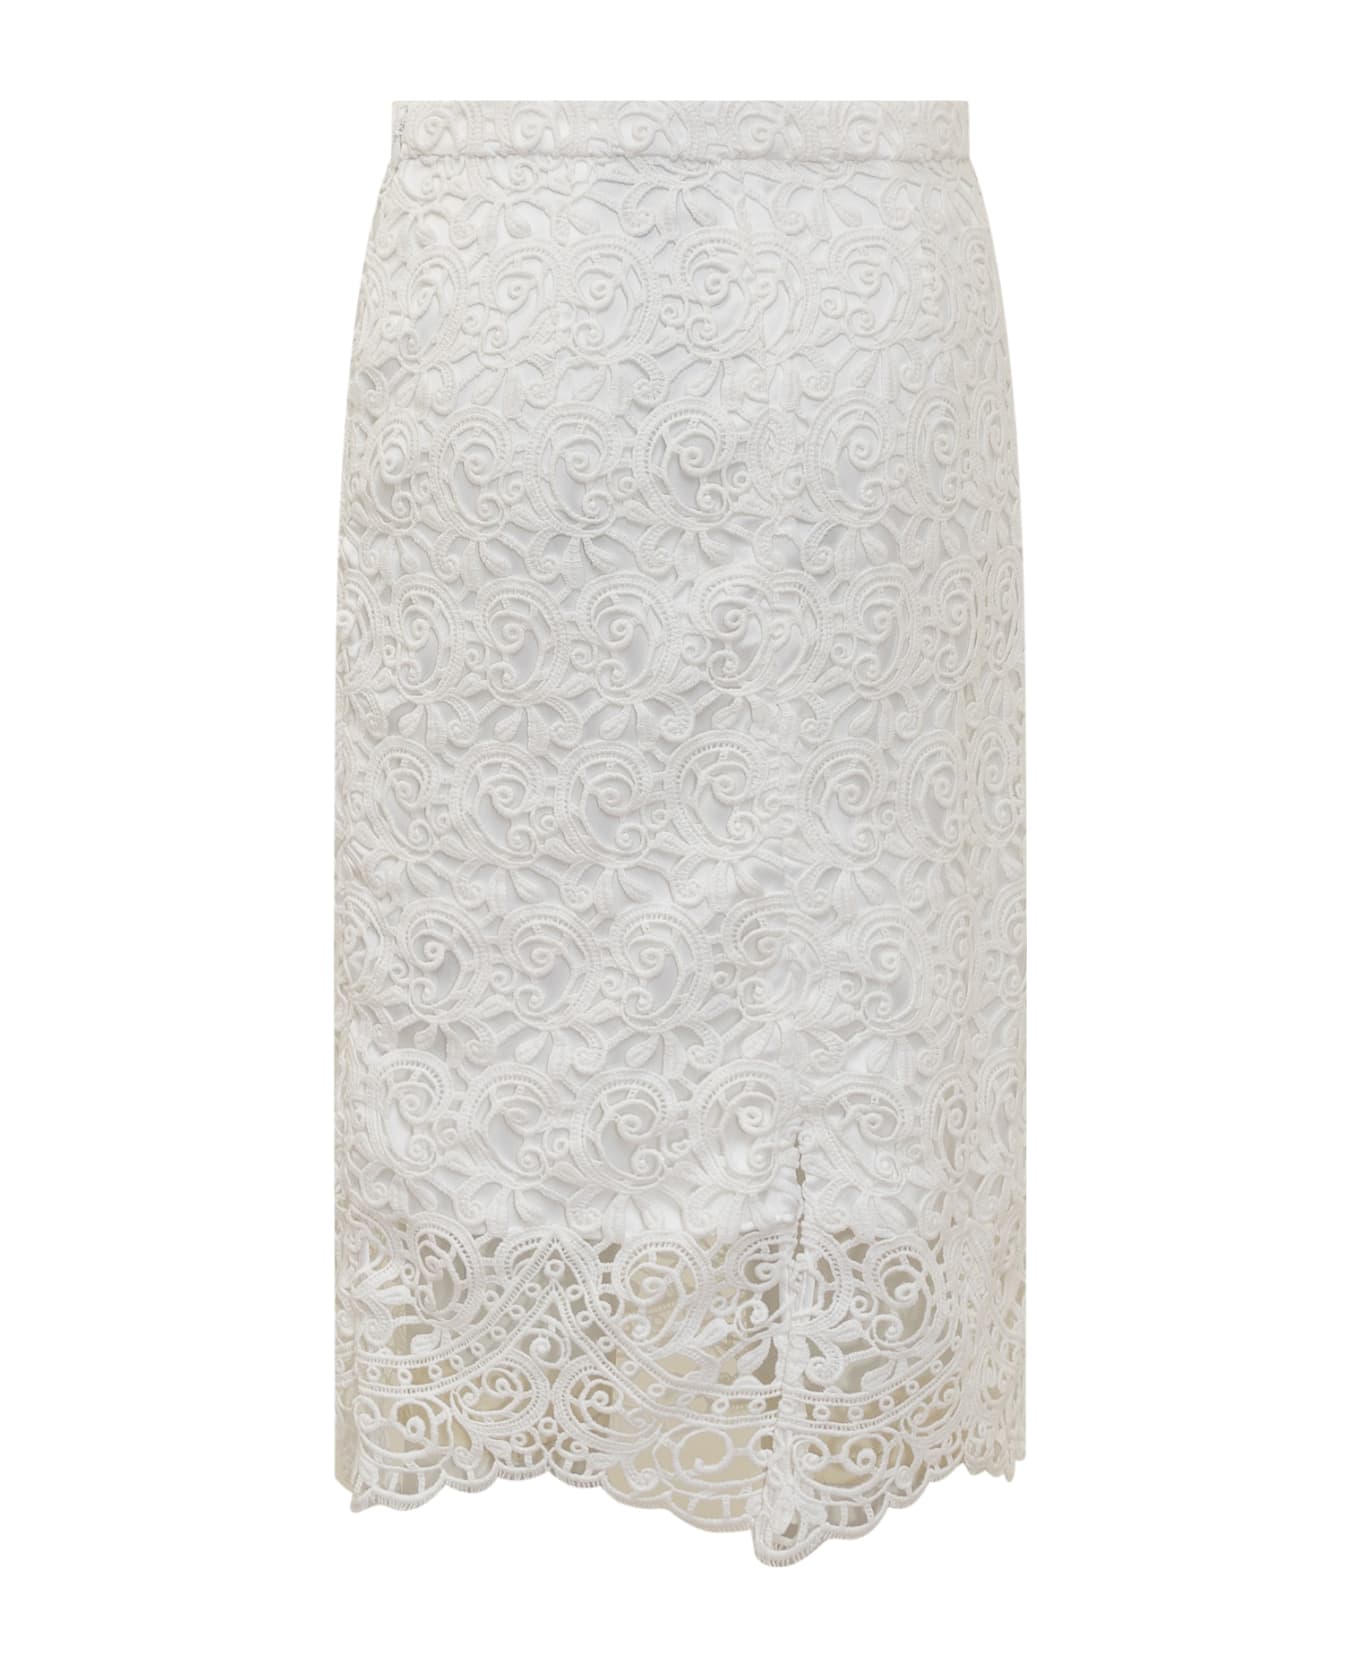 Burberry Macramé Lace Pencil Skirt - OPTIC WHITE